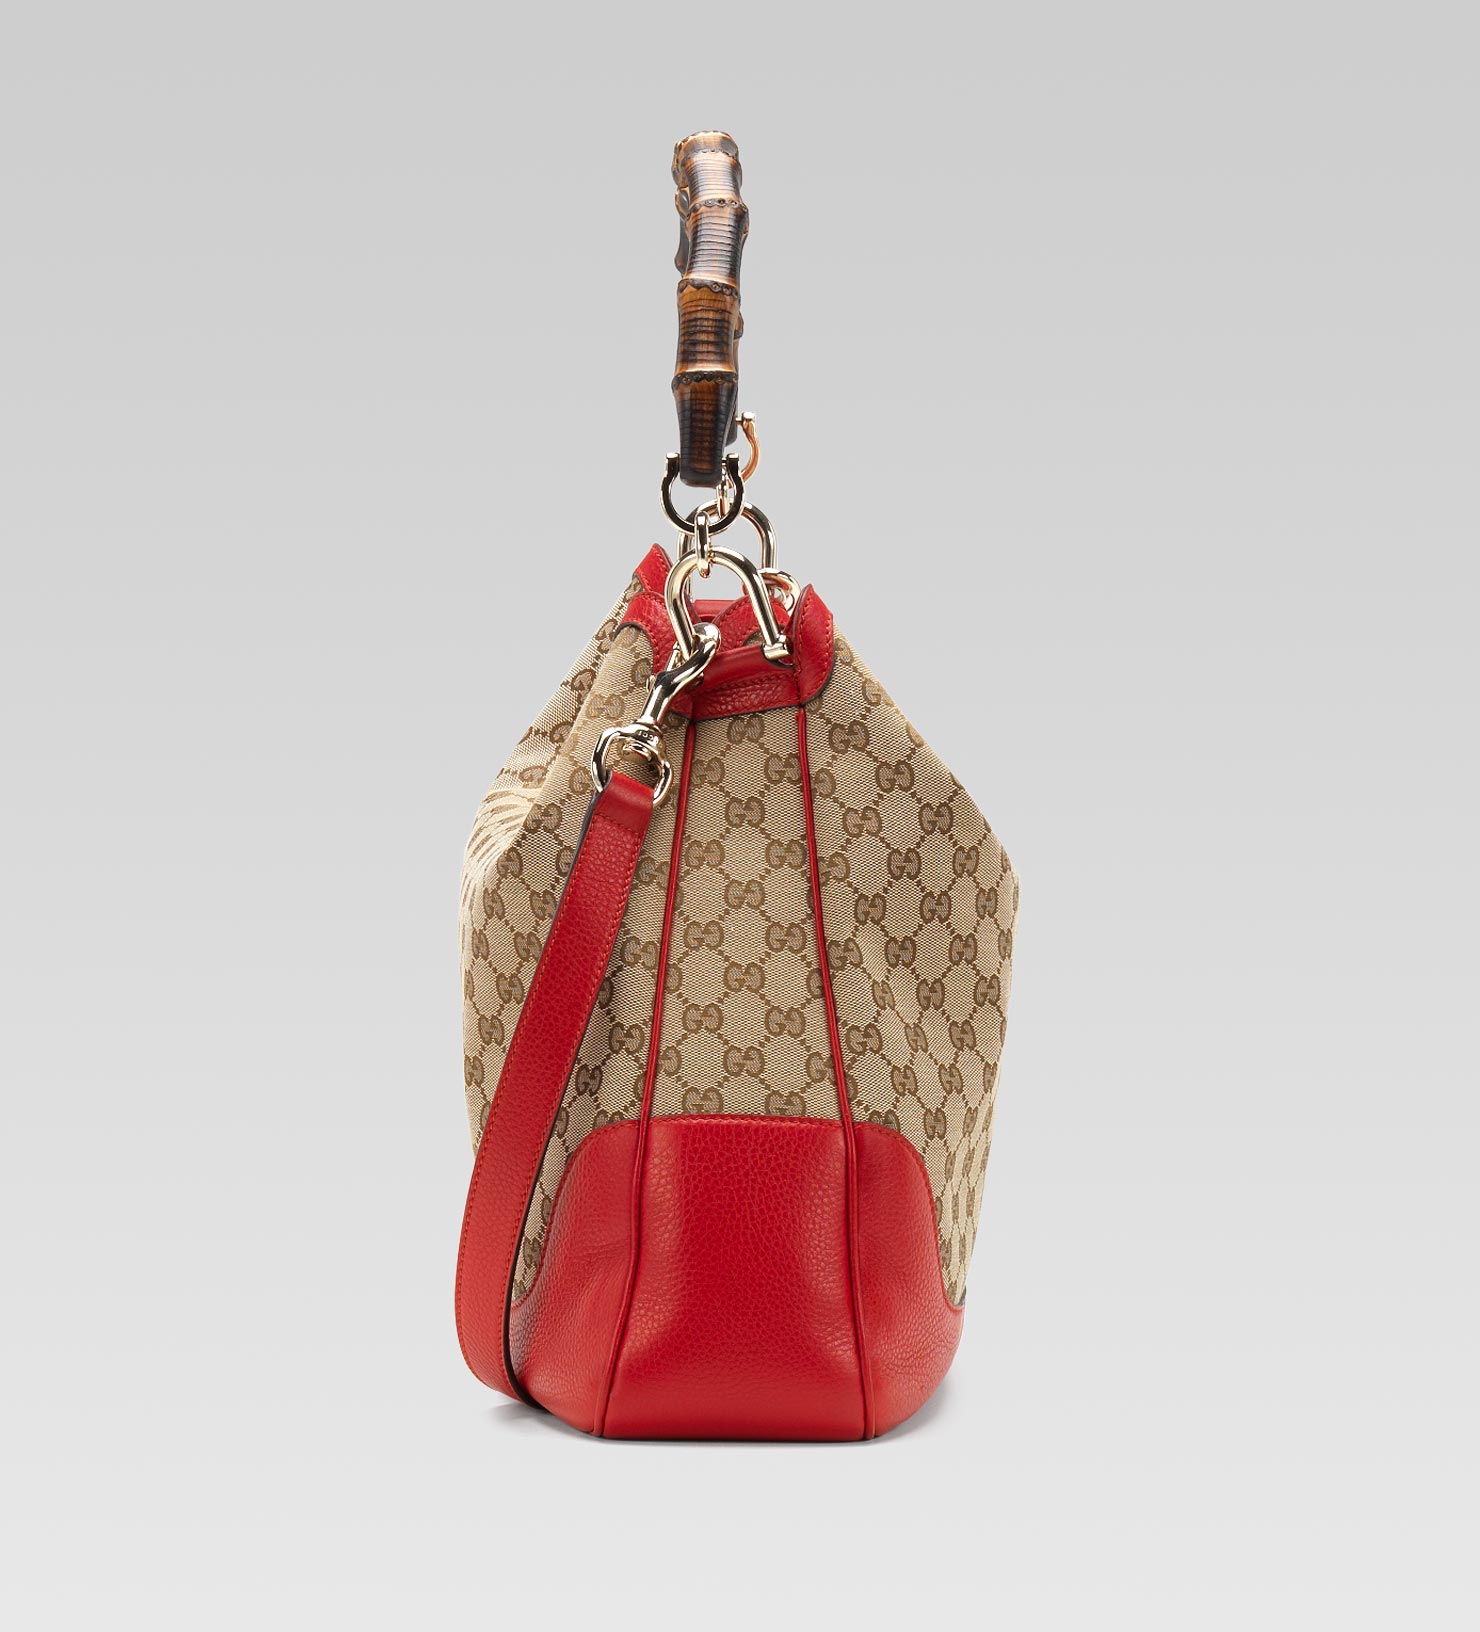 Gucci Diana Bamboo Handle Shoulder Bag in Natural - Lyst